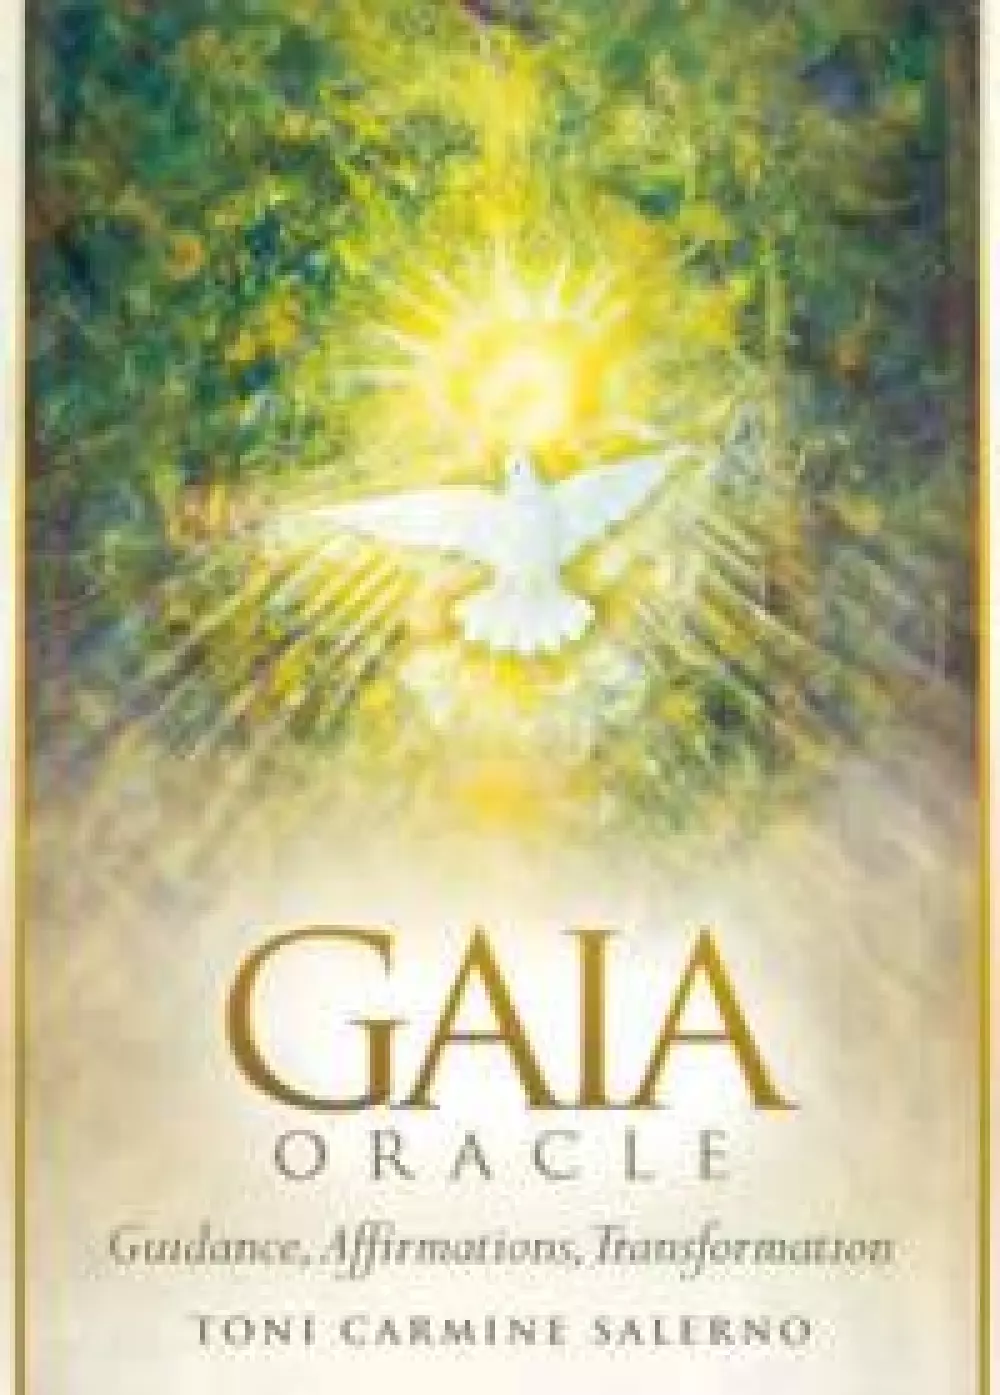 Gaia Oracle, Tarot & orakel, Orakelkort, Guidance, Affirmations, Transformation